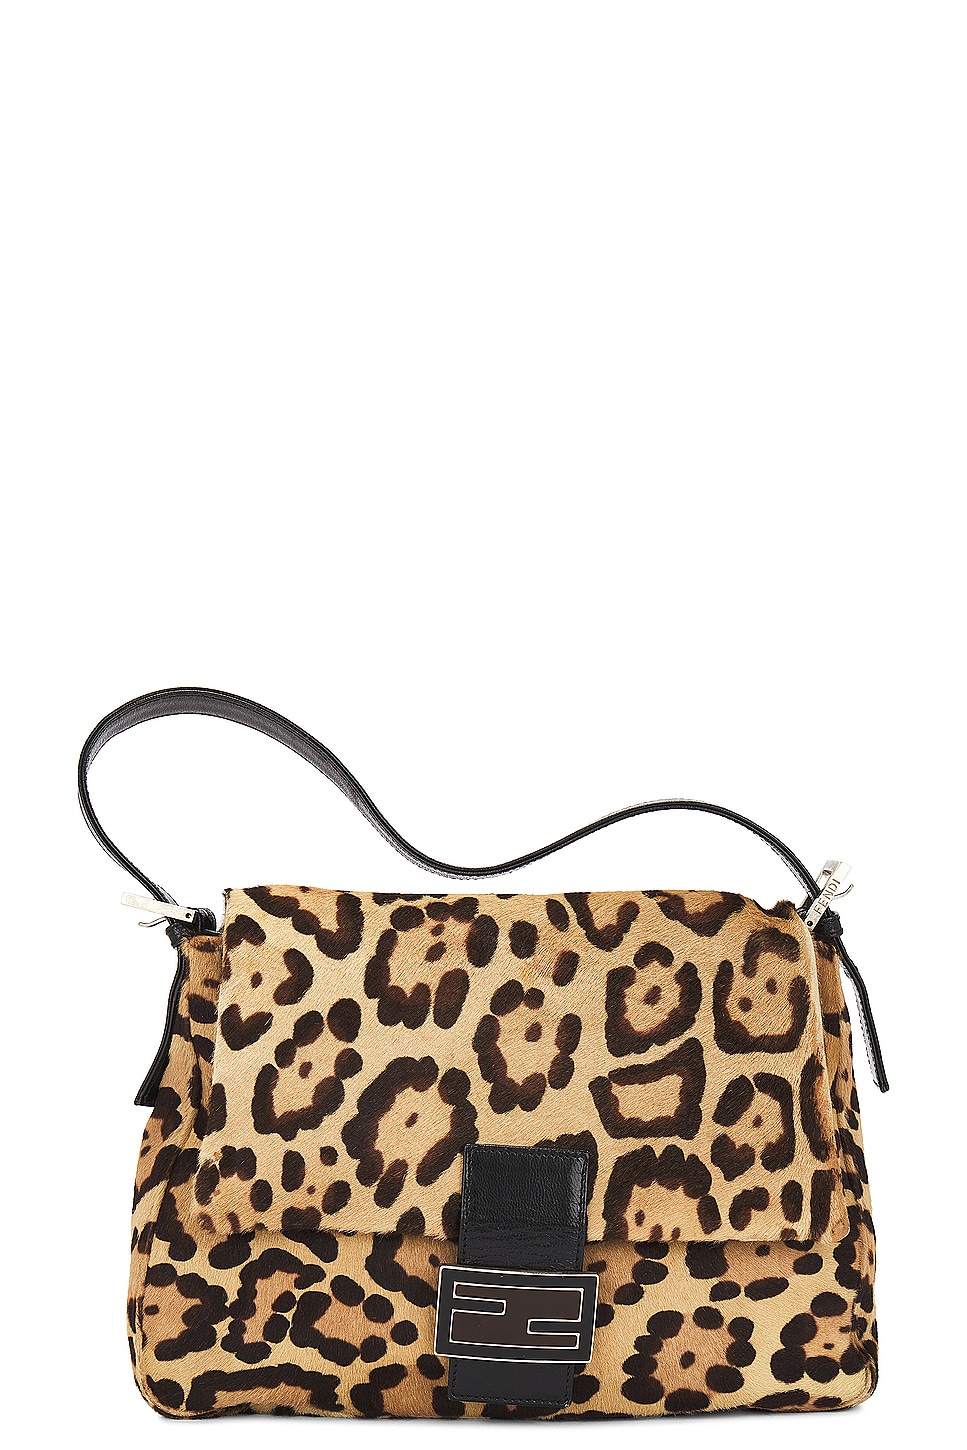 Fendi Leopard Mama Baguette Shoulder Bag in Tan